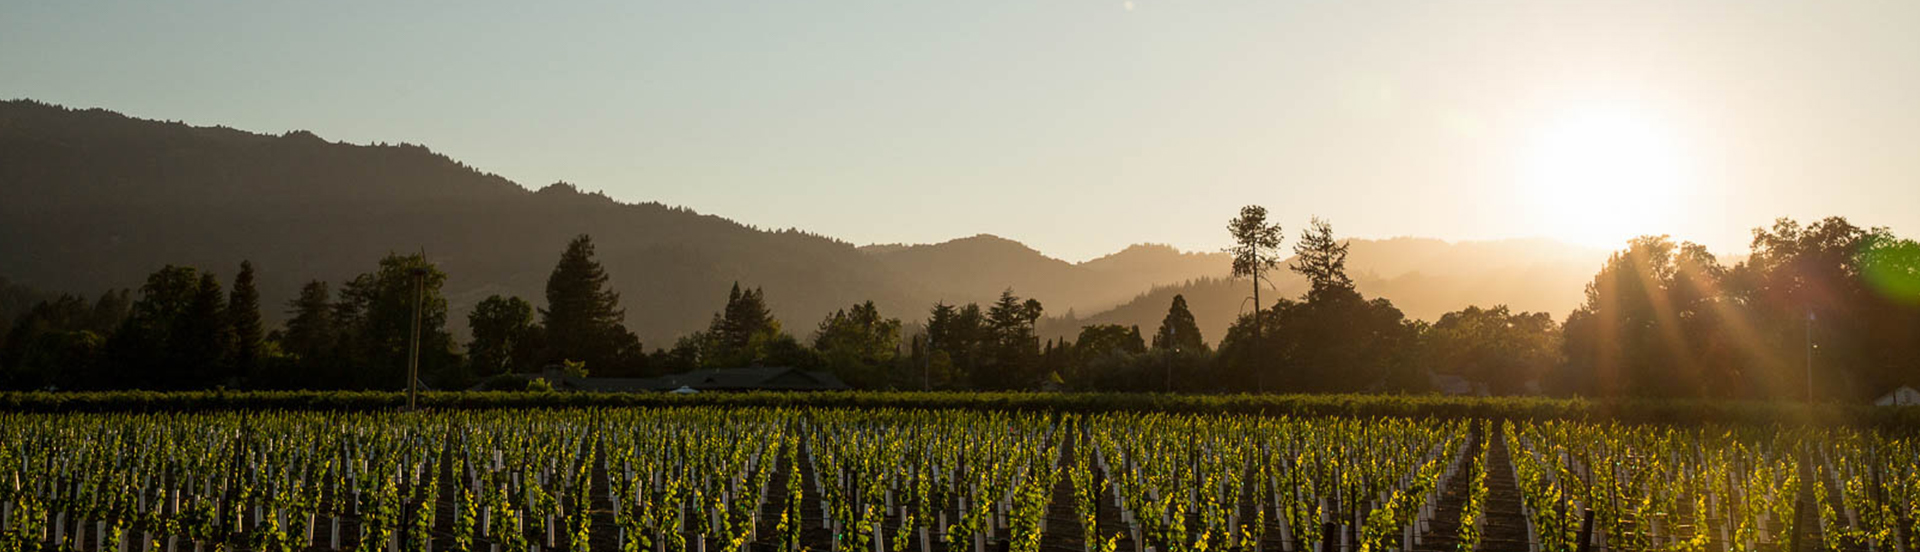 A beautiful vineyard at sunset